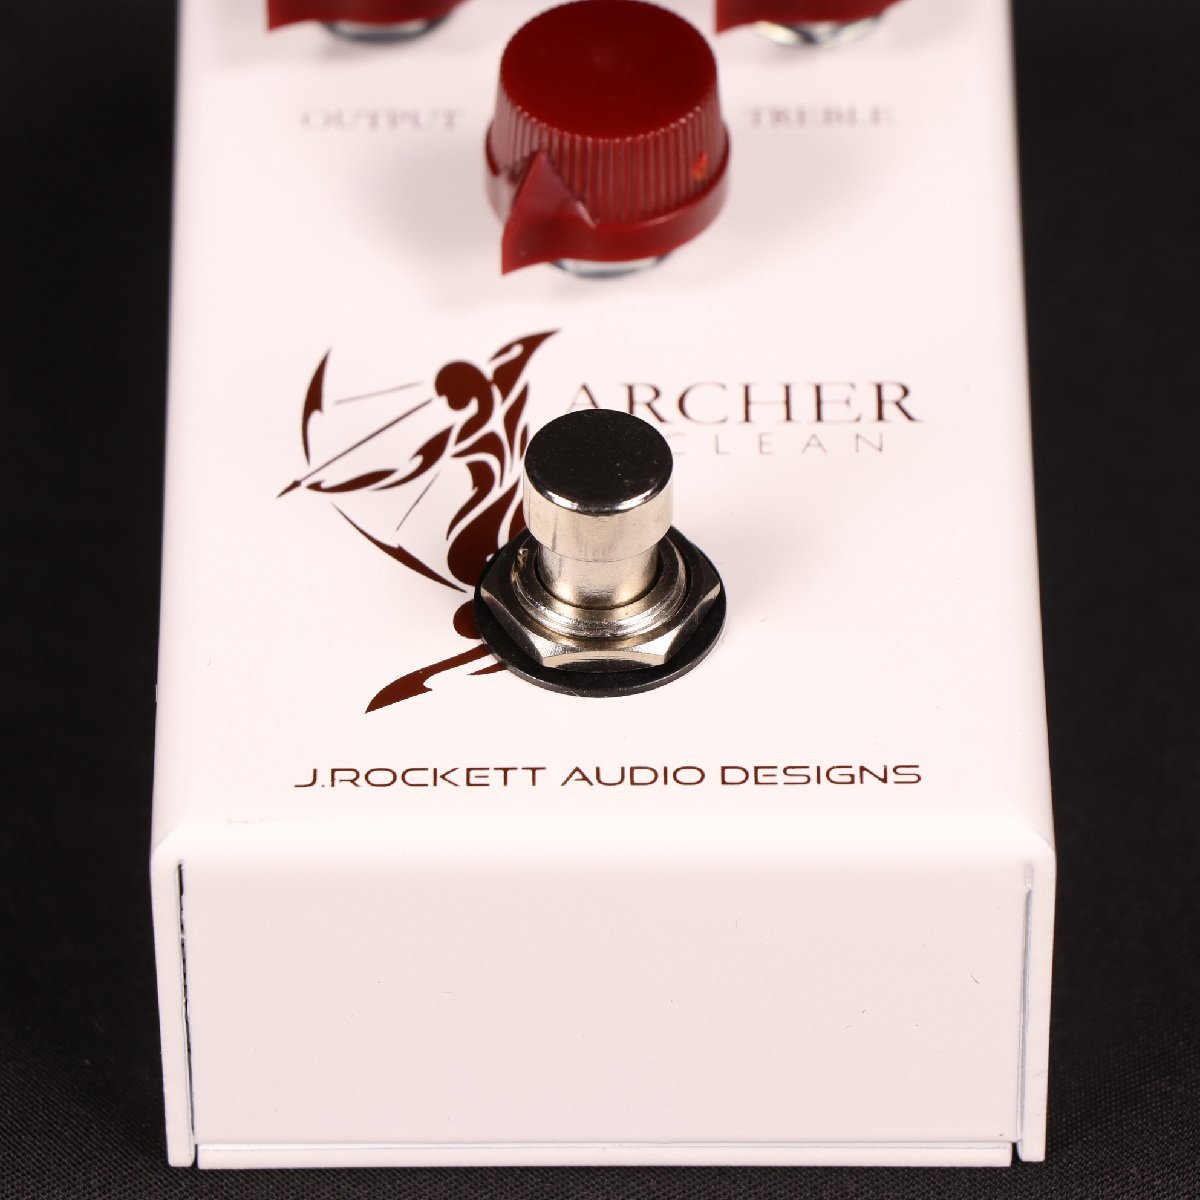 J ROCKETT AUDIO DESIGNS Archer Clean ブースター ジェイ・ロケット・オーディオ・デザインズ【新宿店】（新品/送料無料 ）【楽器検索デジマート】